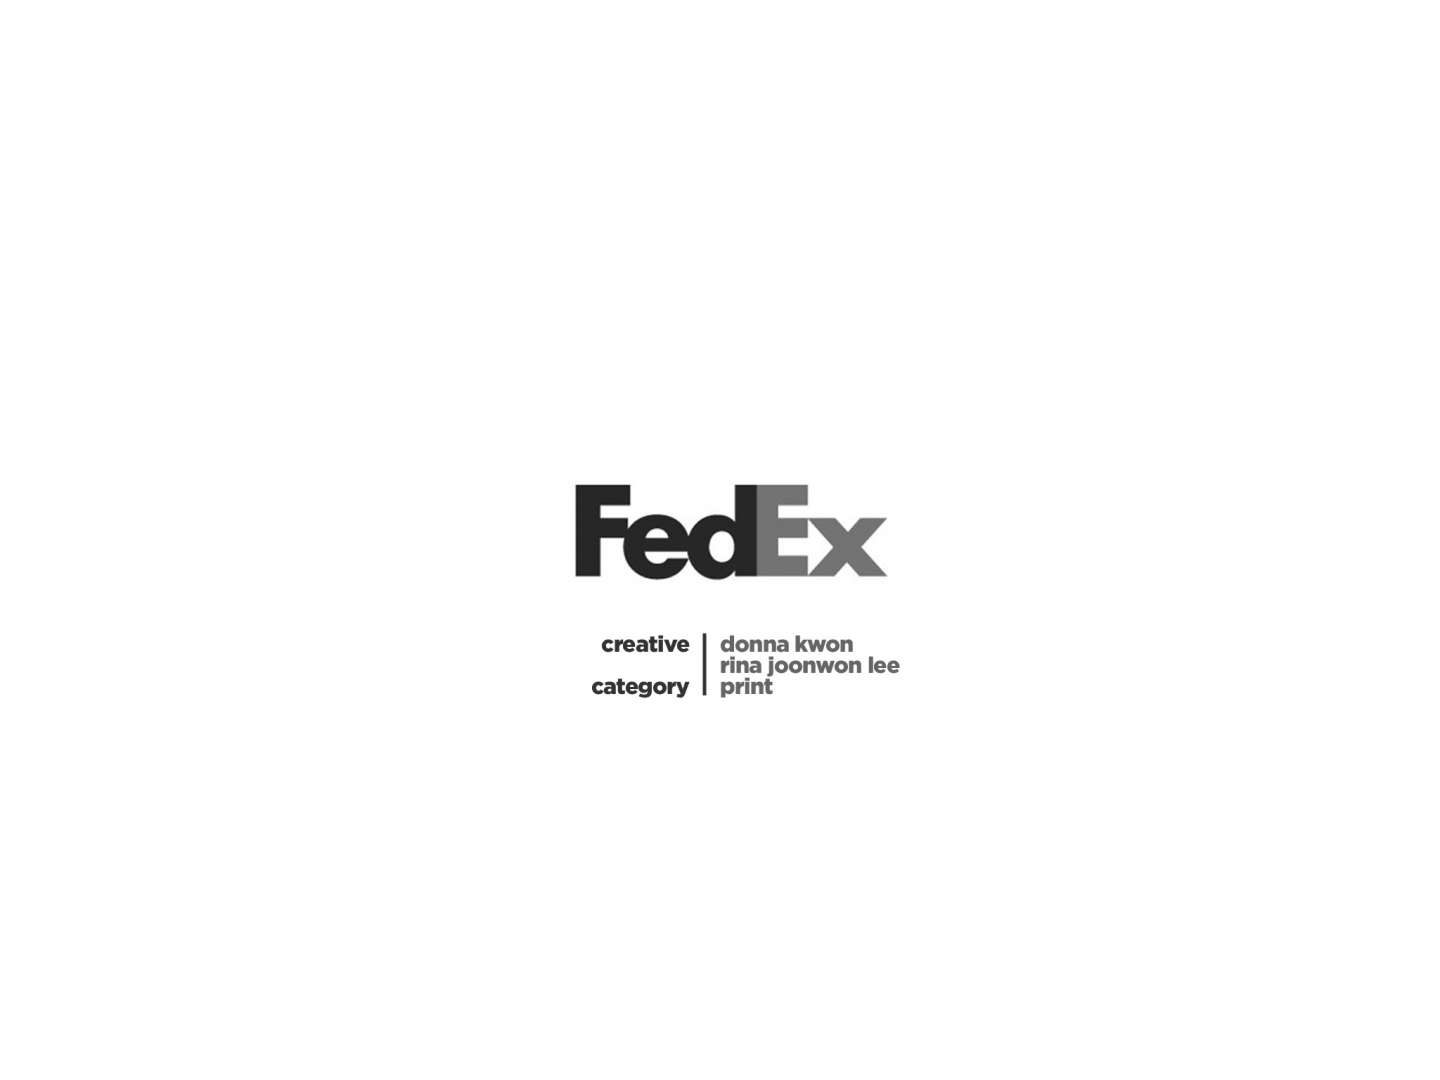 Fedex print campaign